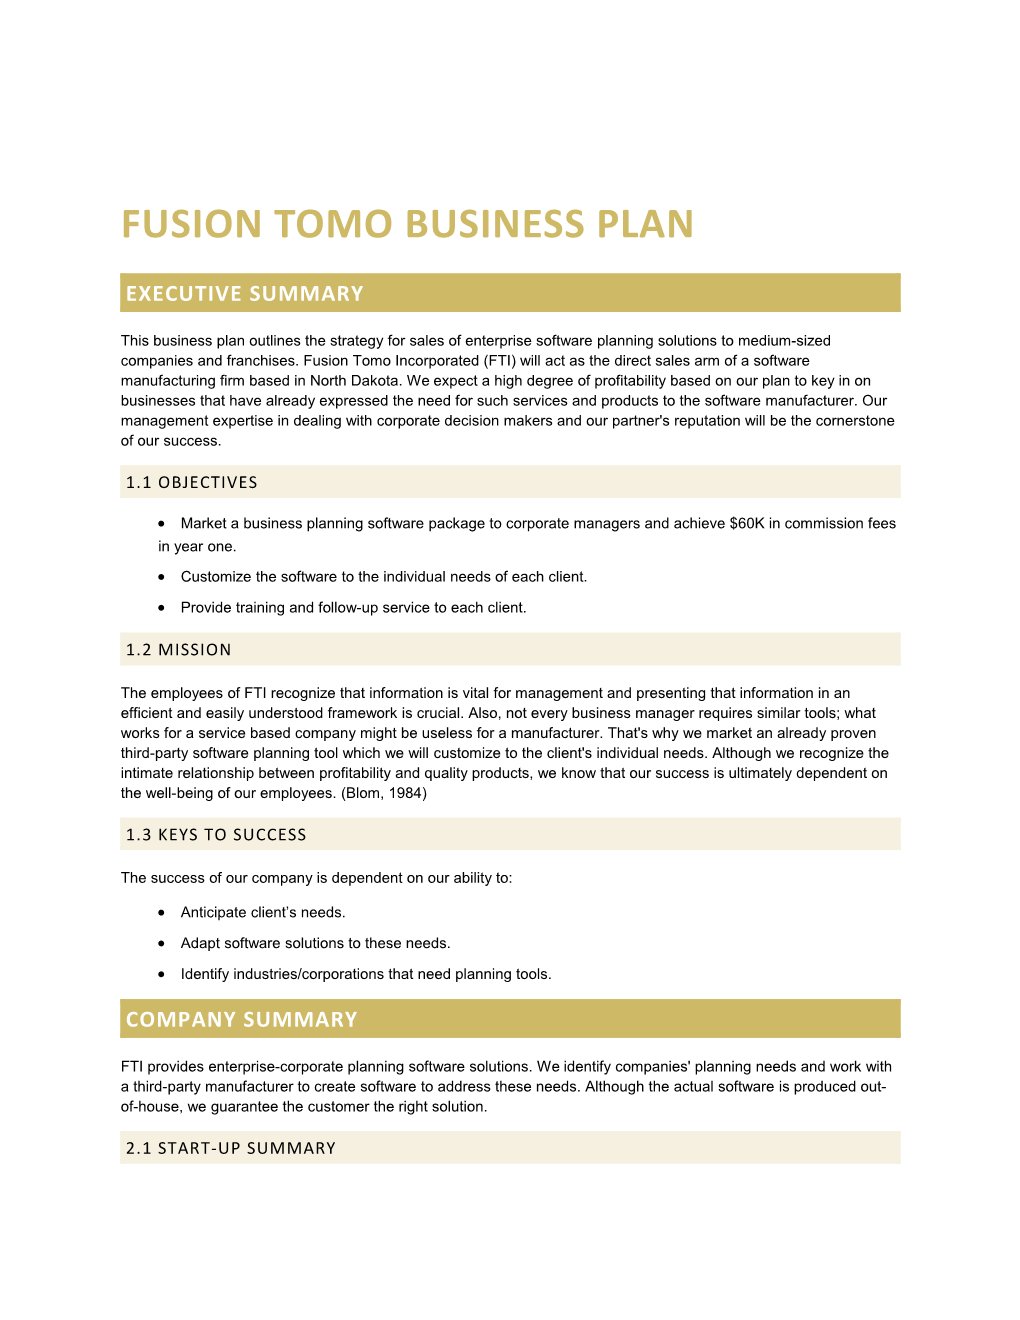 FTI Business Plan